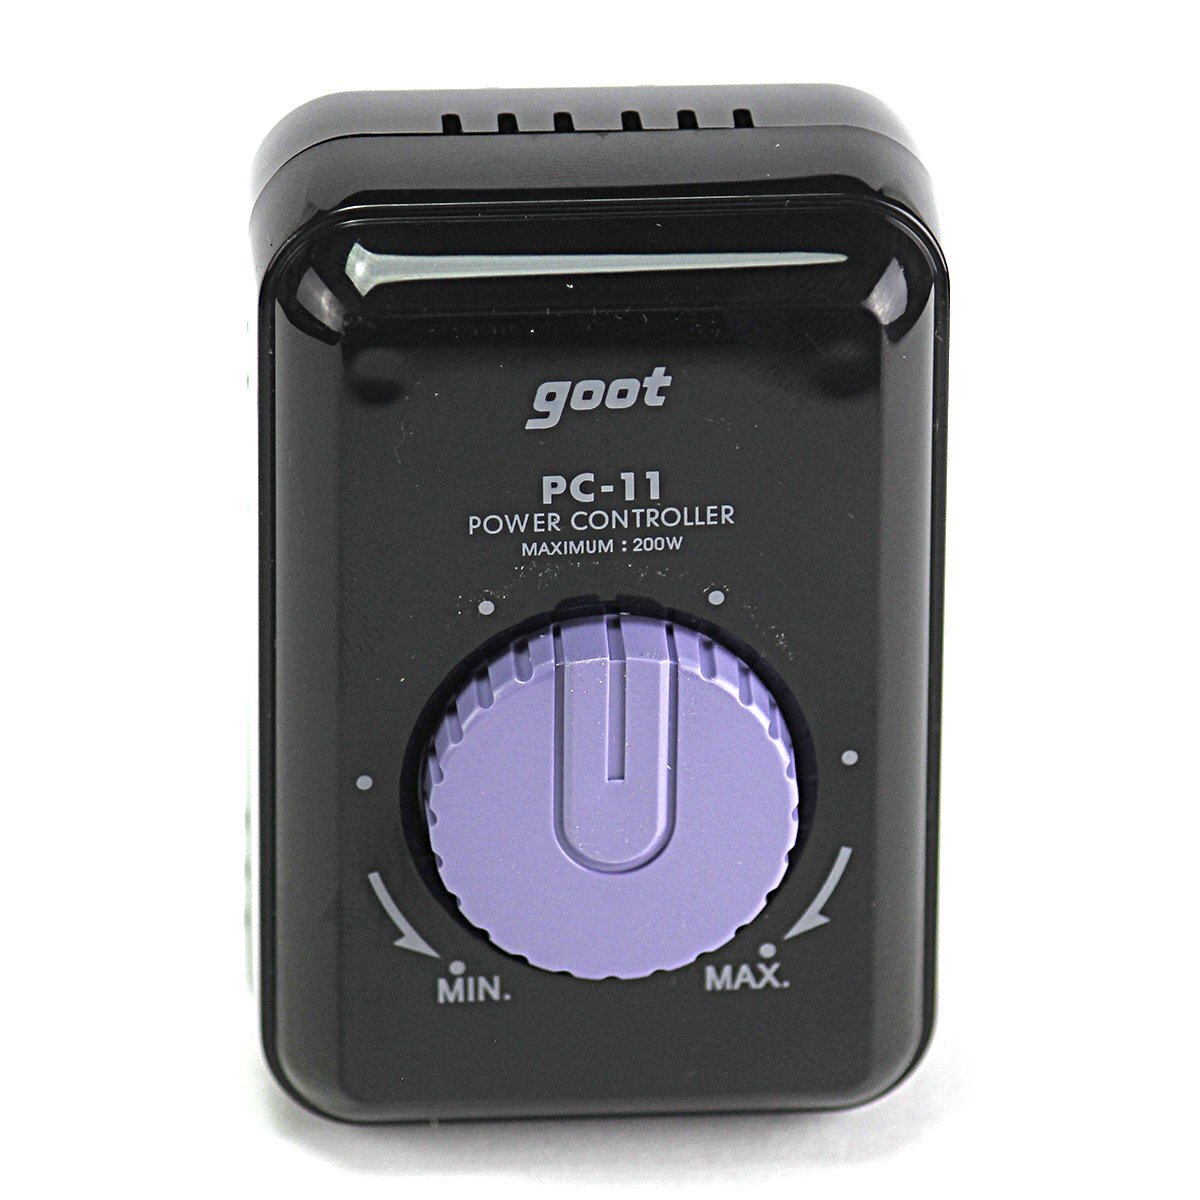 goot(グット) パワーコントローラー 電気はんだごて専用 こて先の温度調整 電力調節器 オン/オフスイッチ無し 20~200W PC-11_画像4